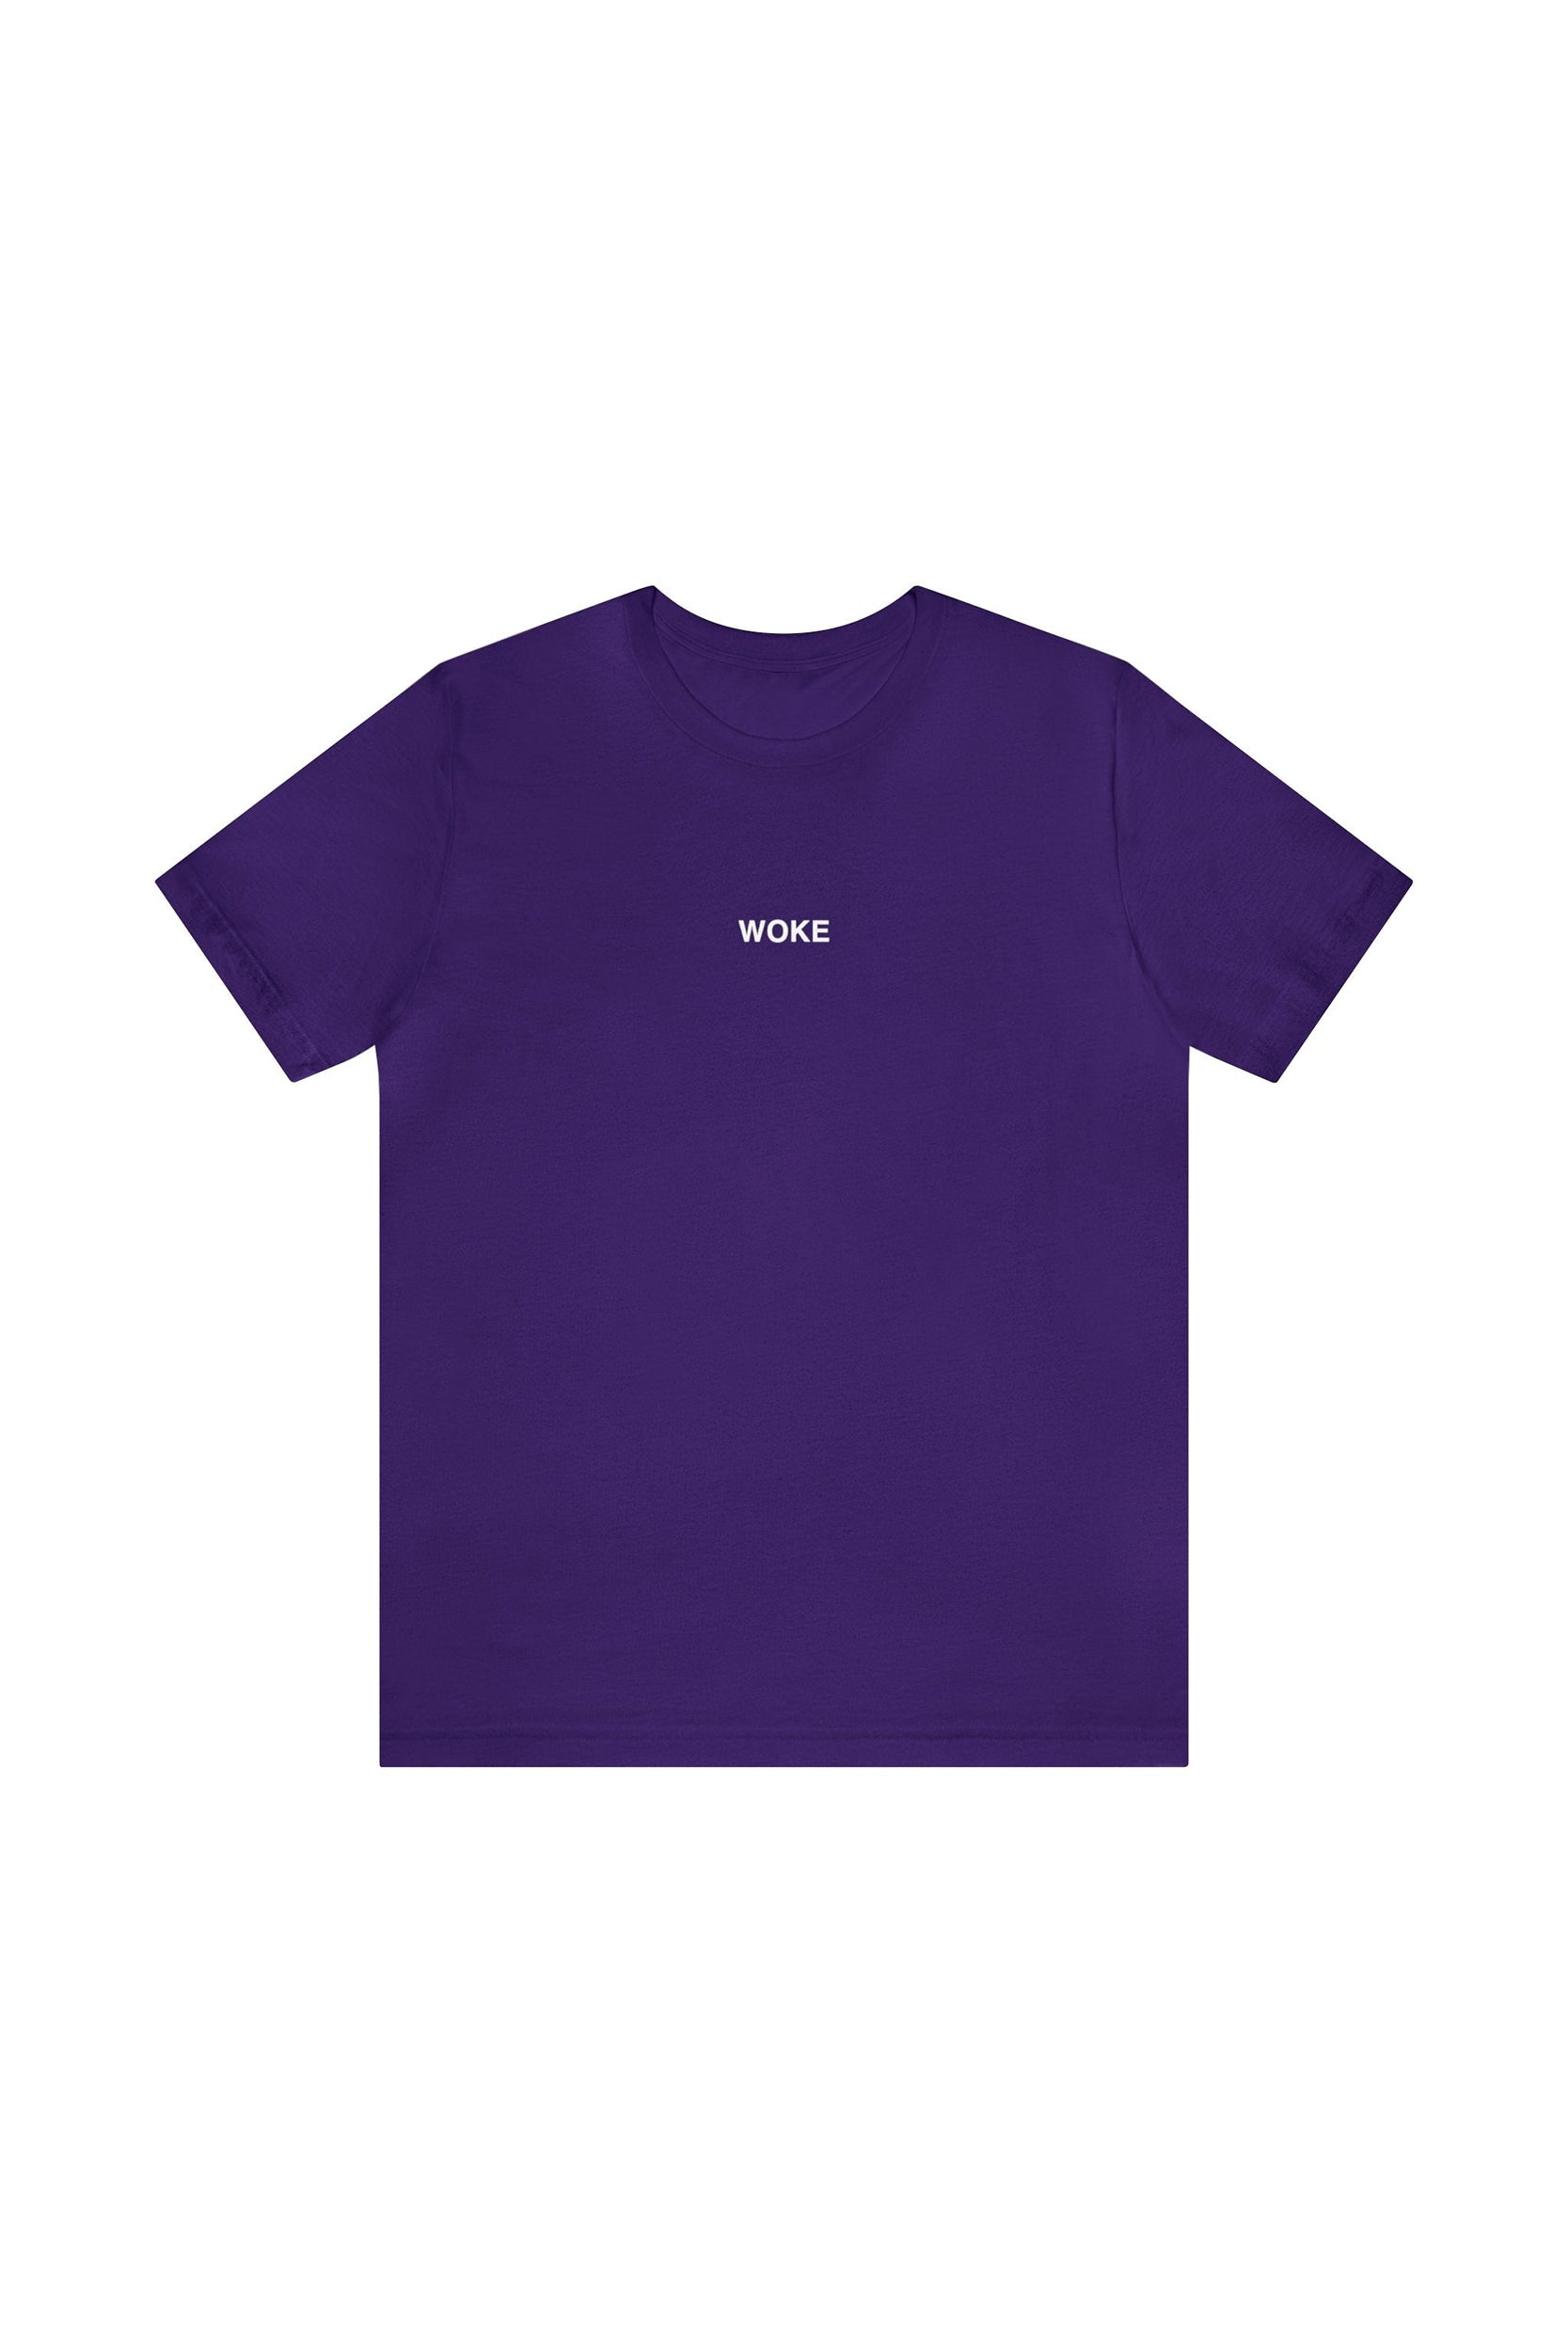 "WOKE" T-Shirt